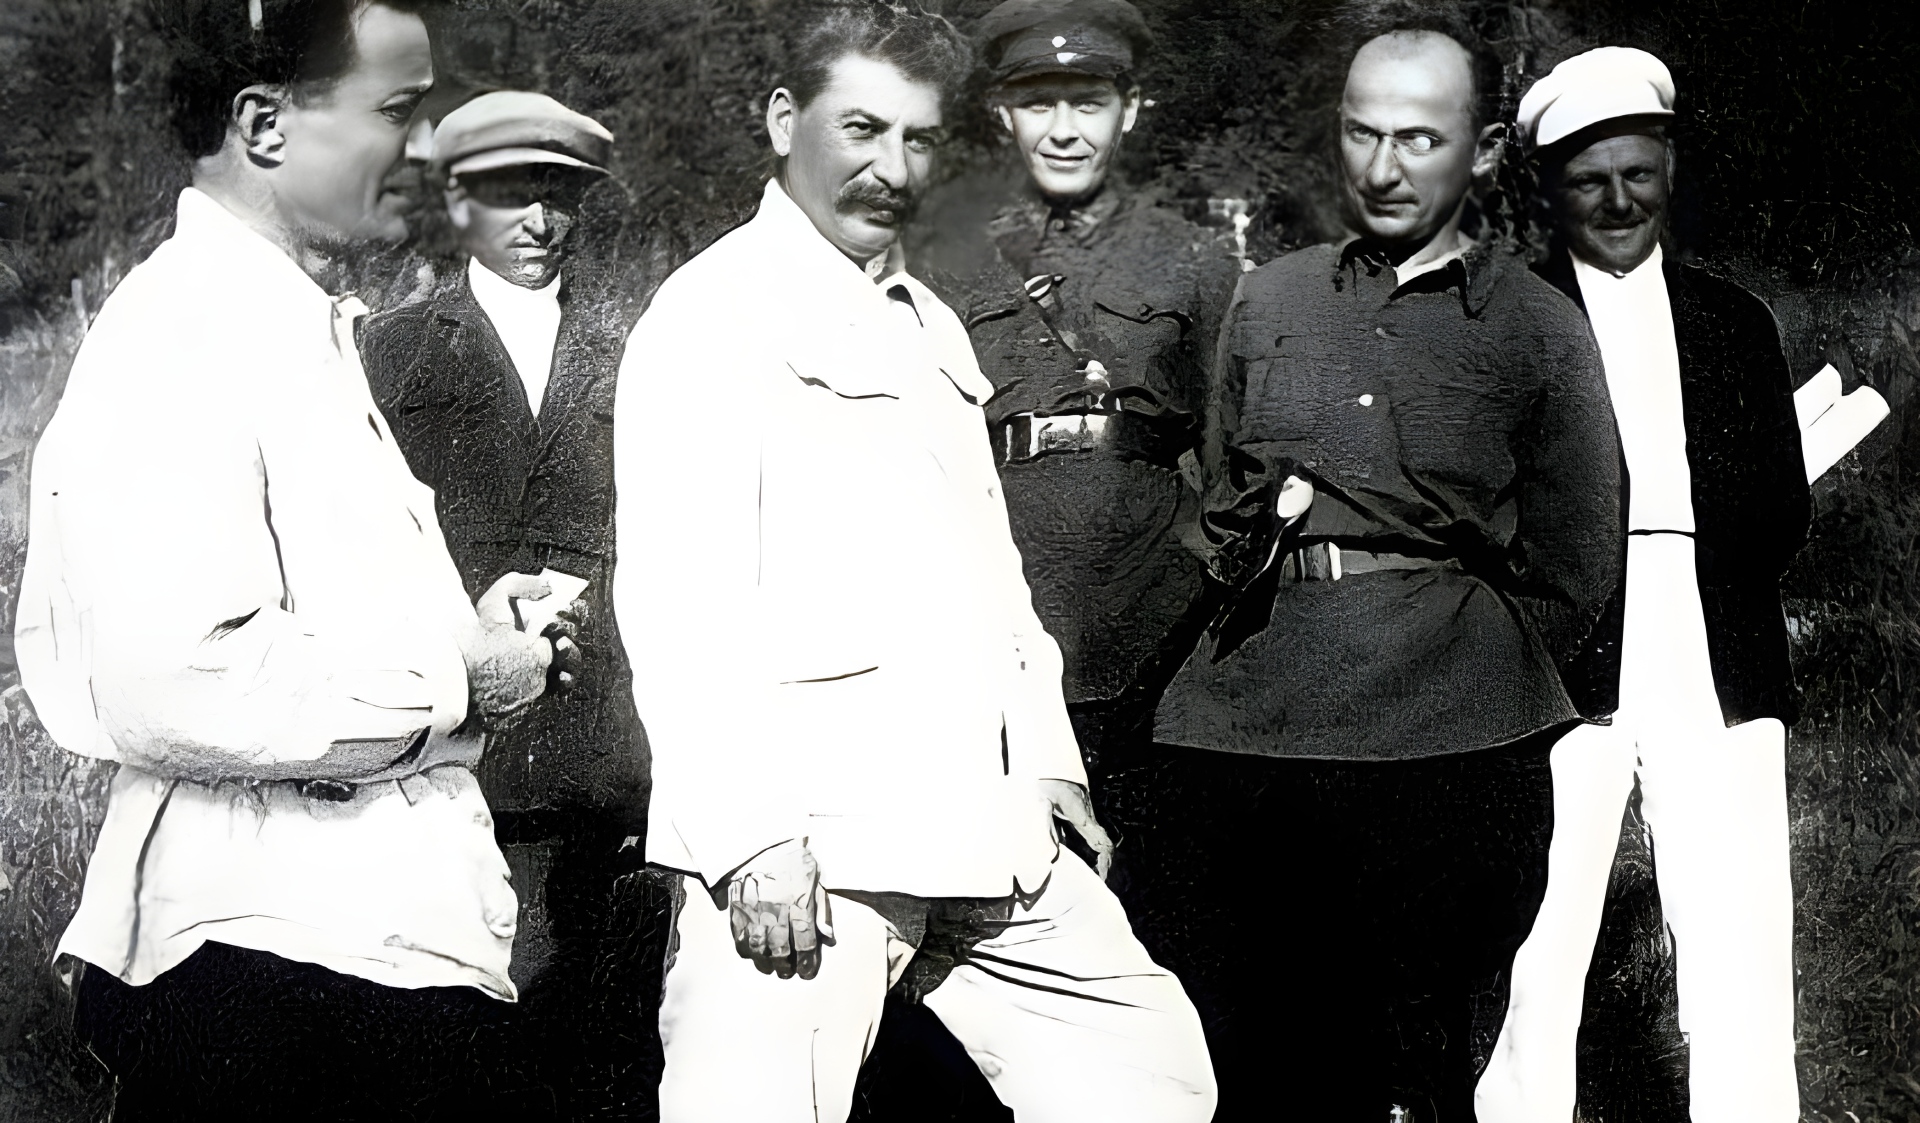 Nestor Lakoba [L], Joseph Stalin (Dzhugashvili) and Lavrentiy Beria.